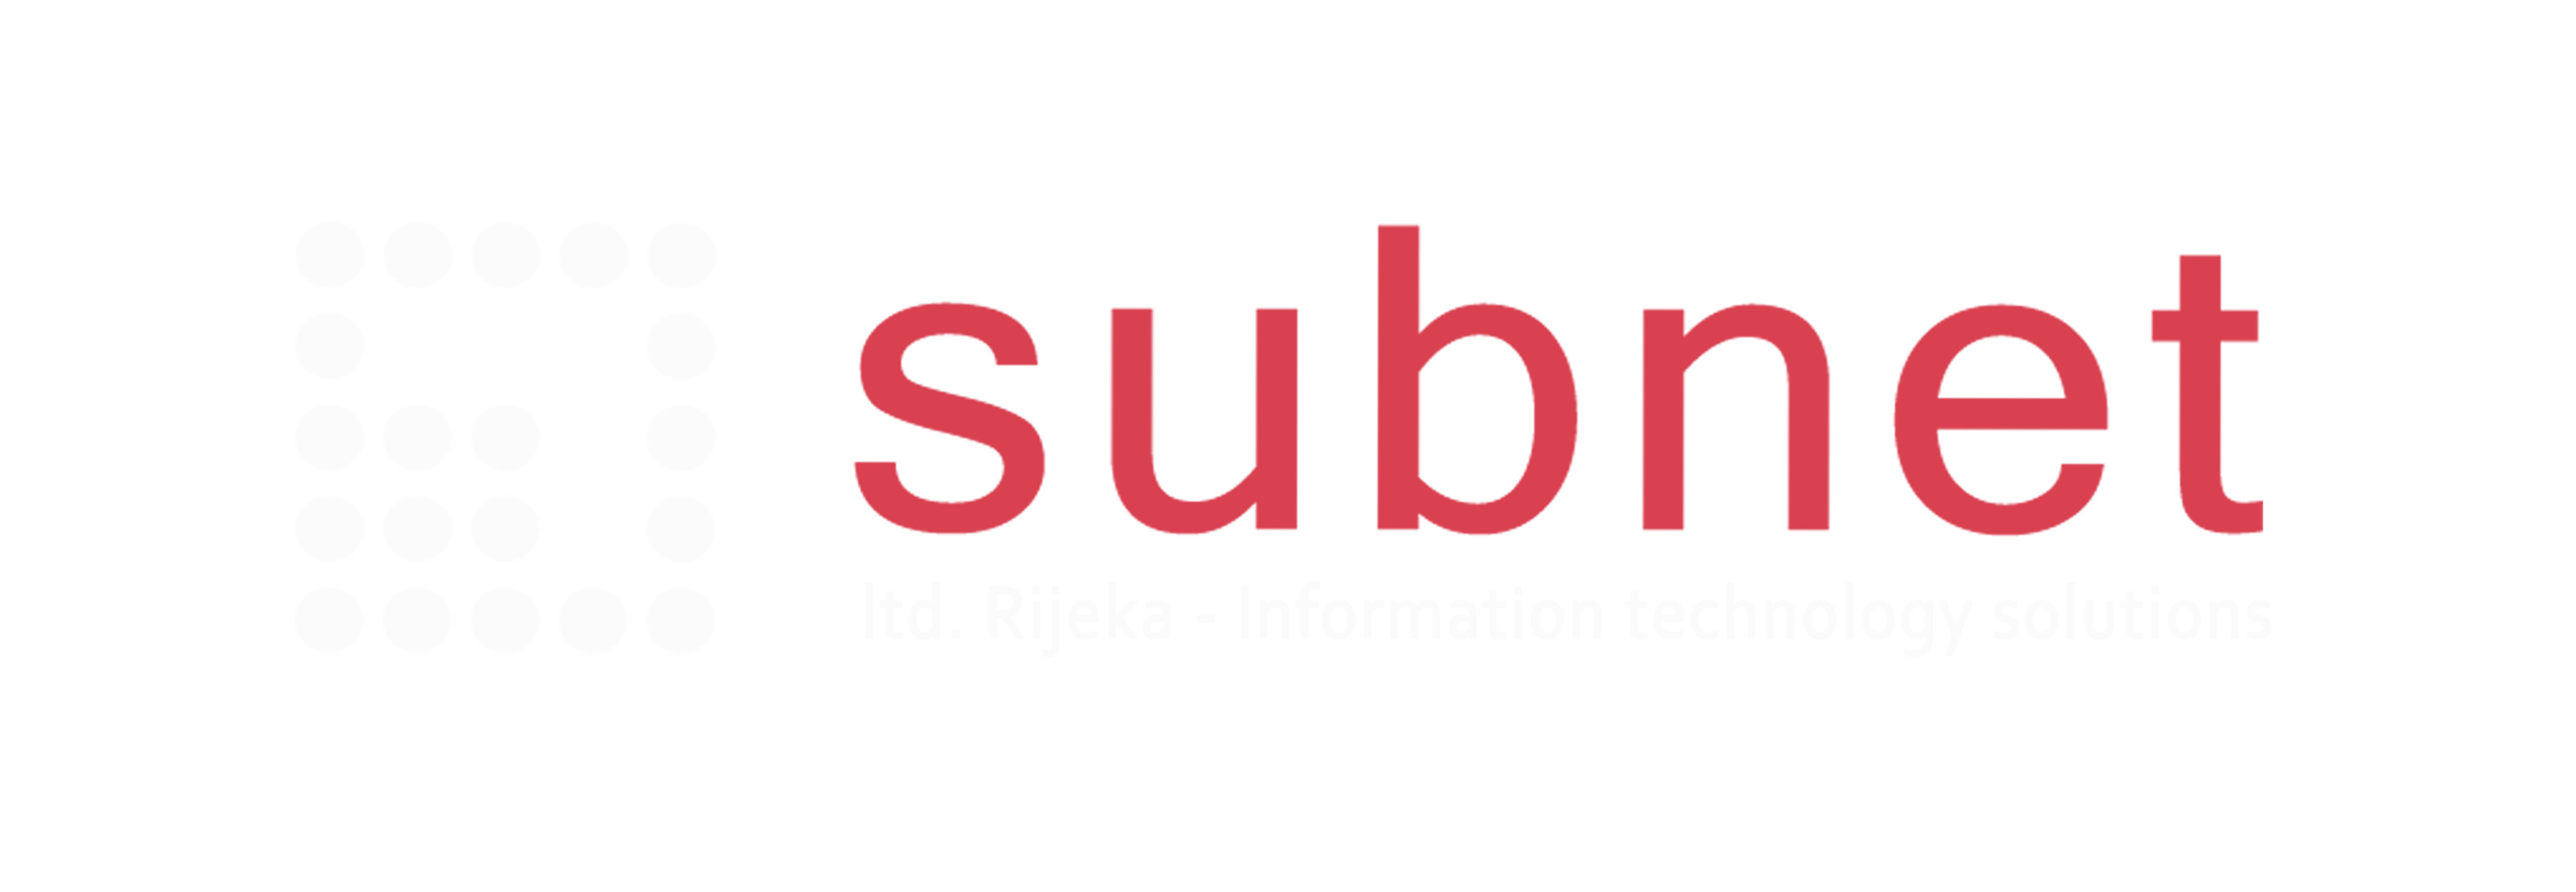 Subnet logo